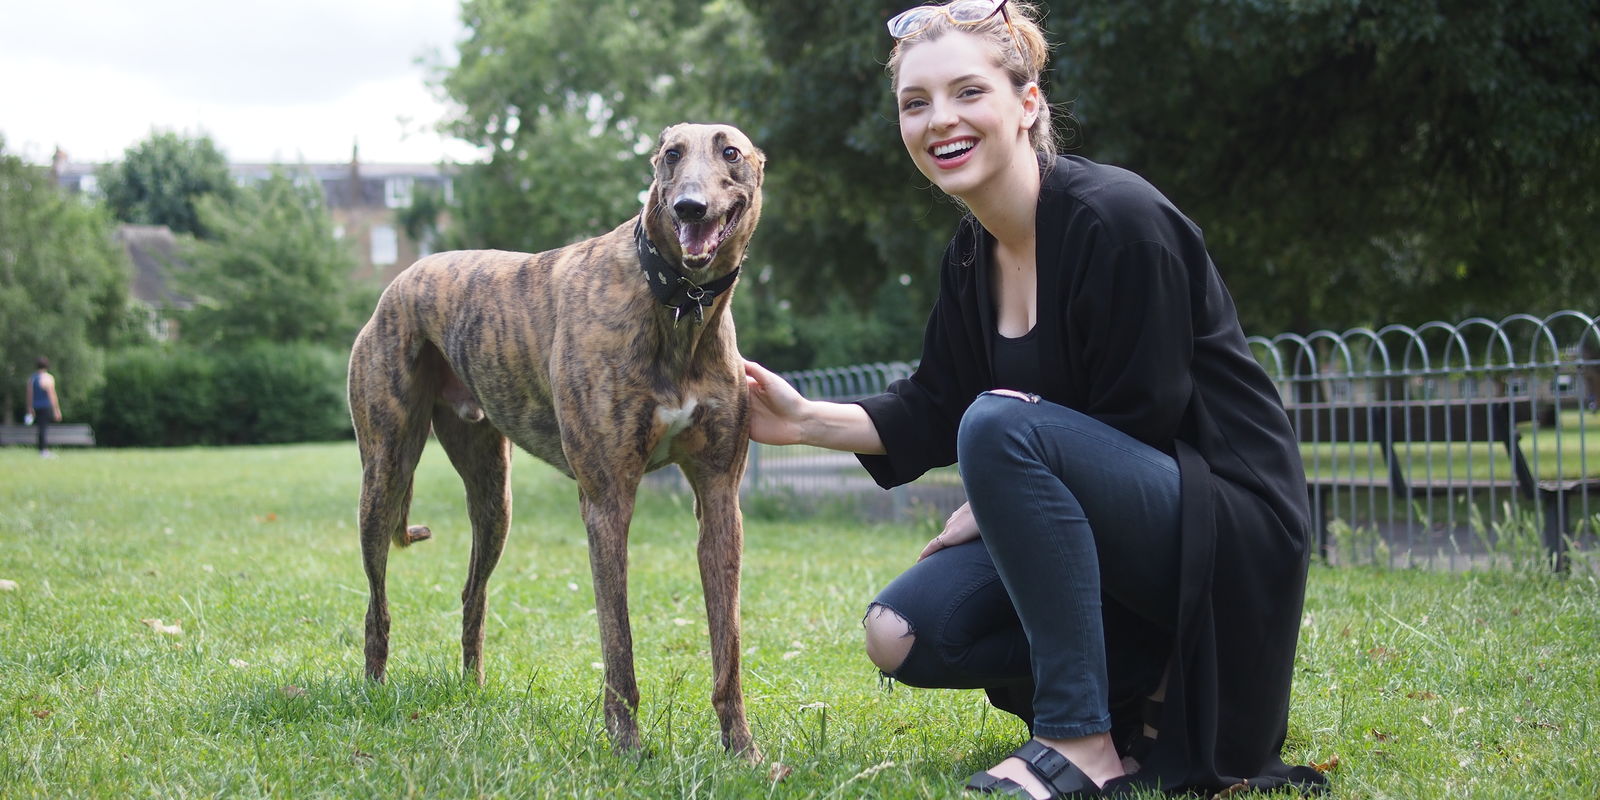 Estee and her greyhound Reggie